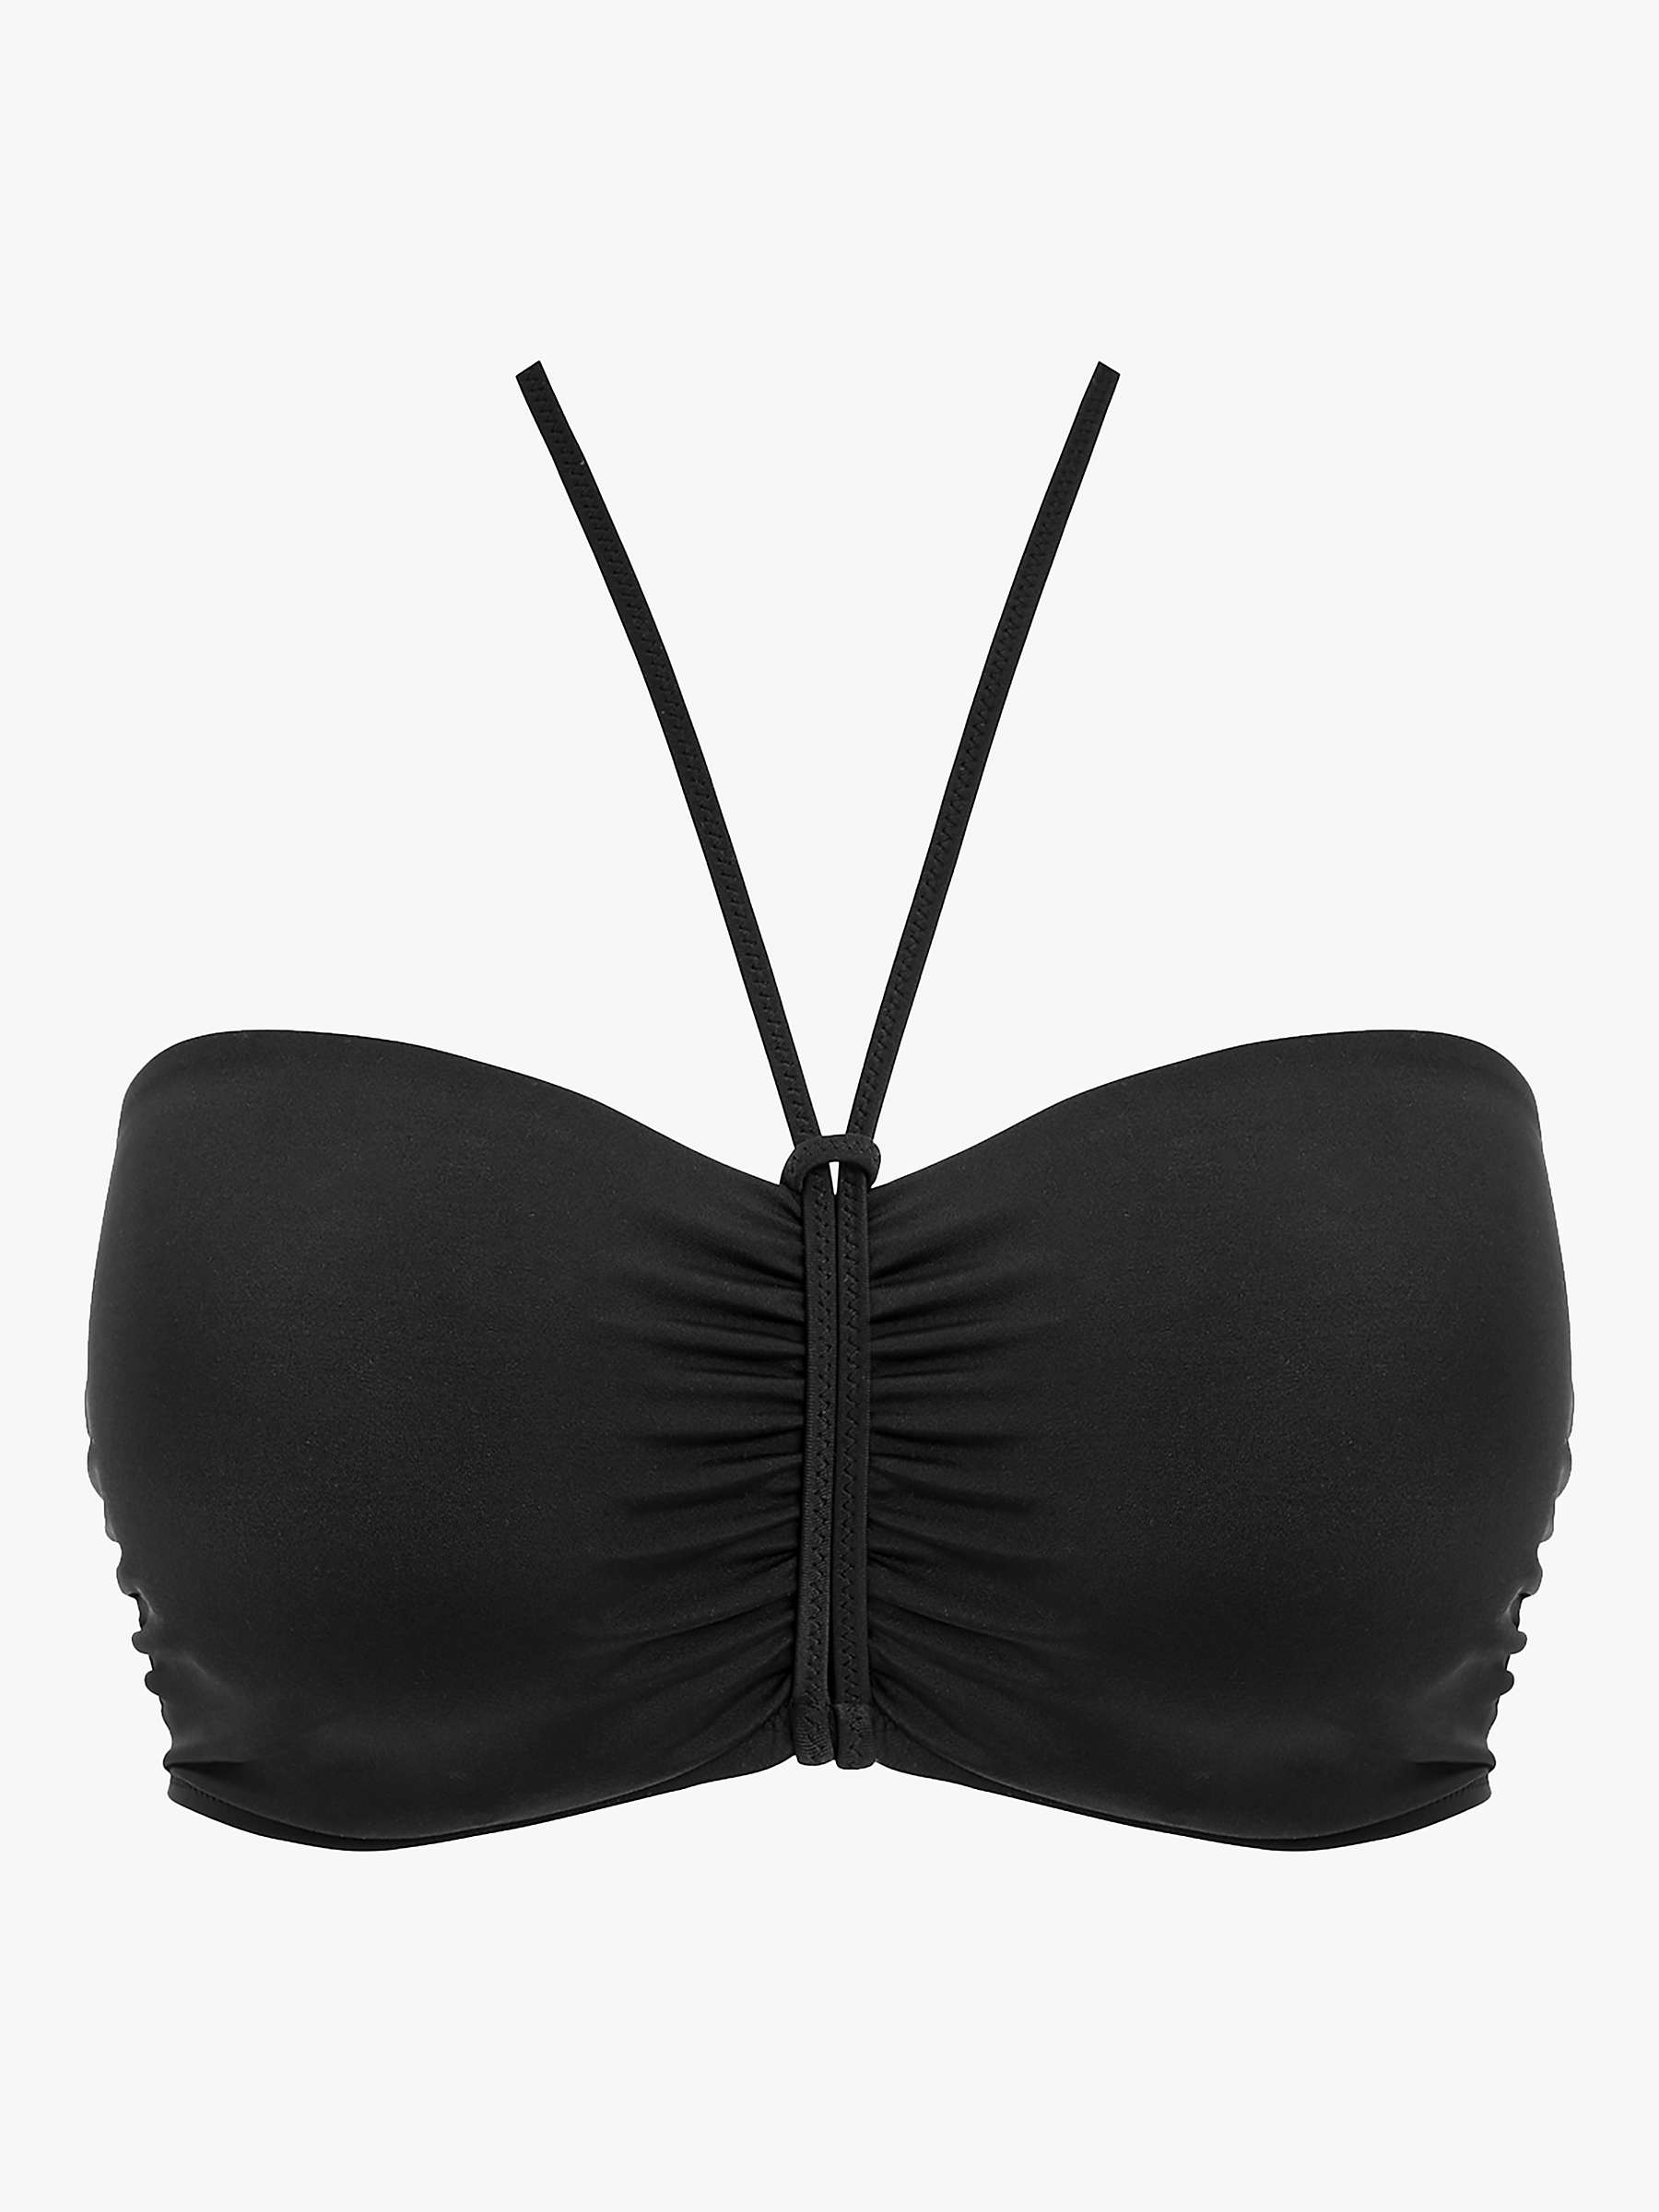 Buy Freya Jewel Cove Plain Underwired Bandeau Bikini Top, Black Online at johnlewis.com